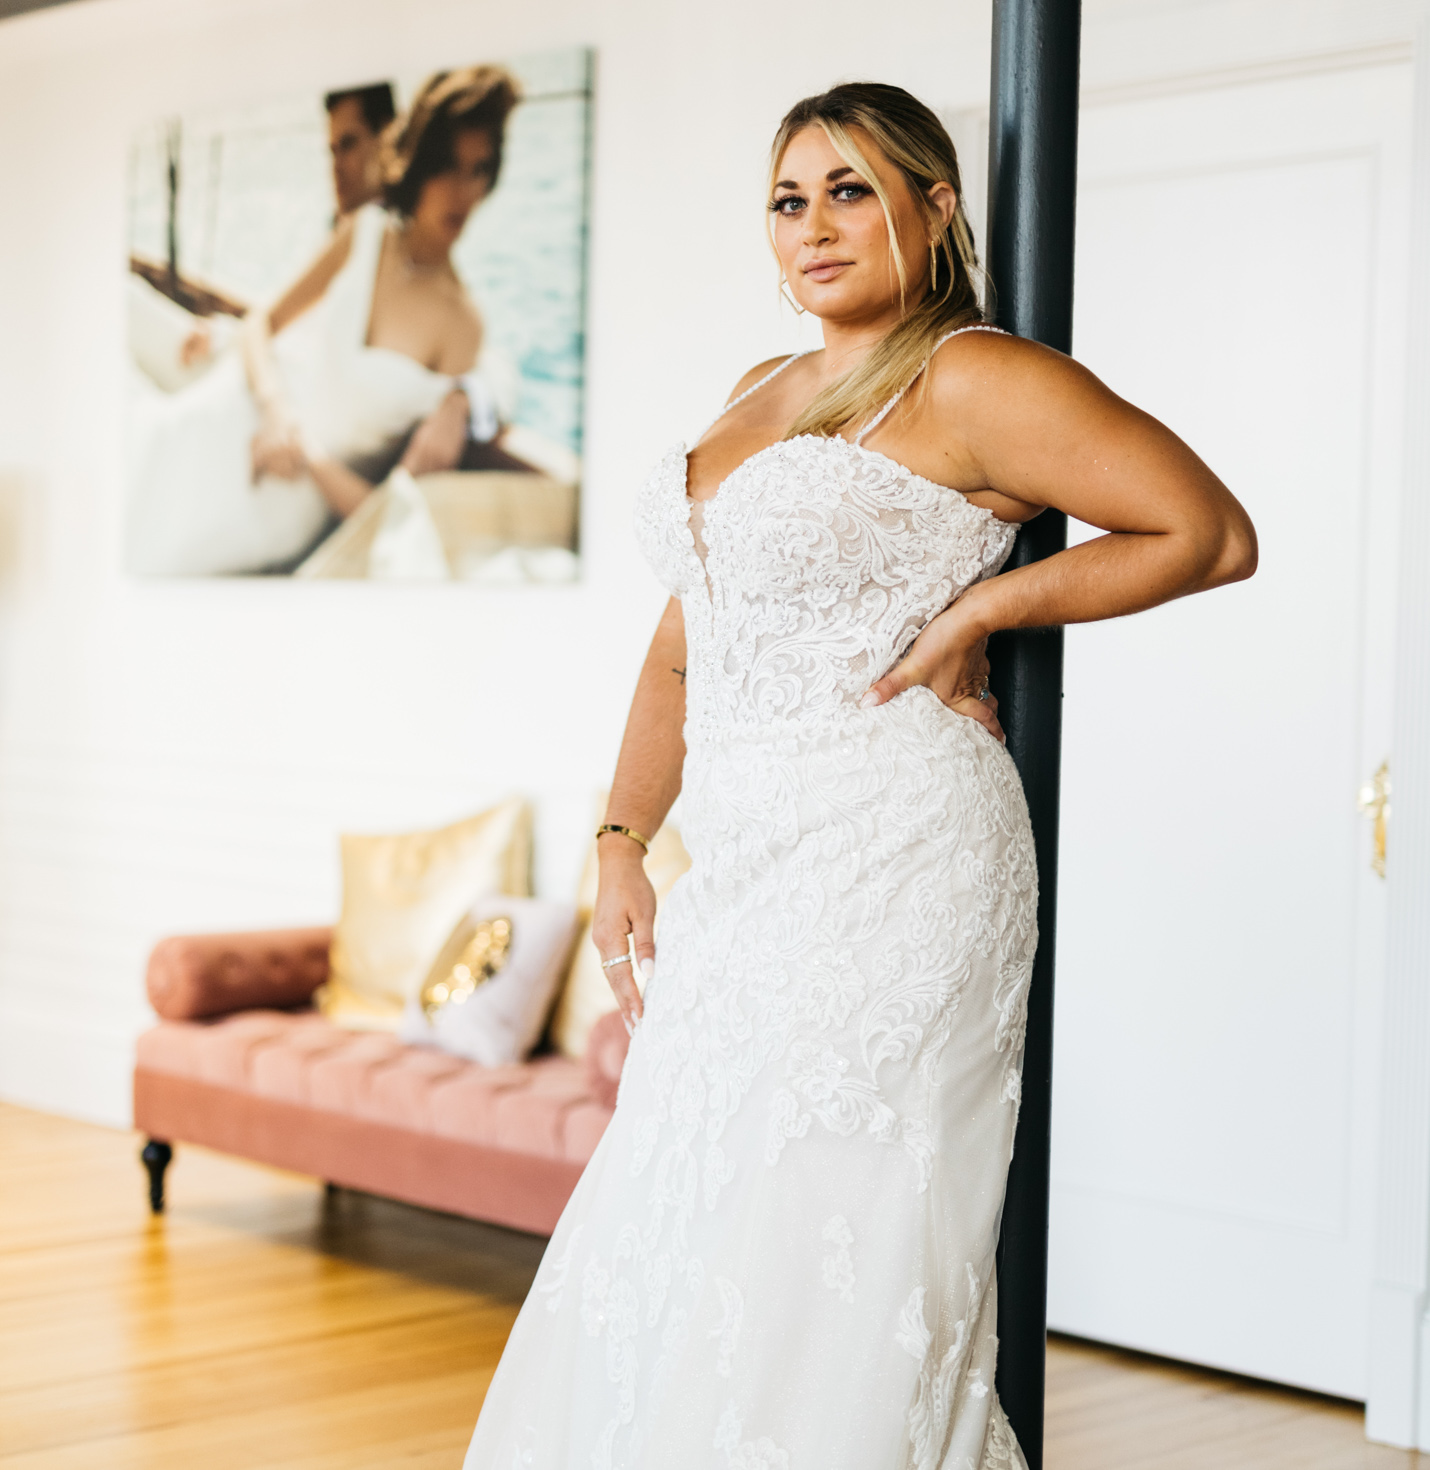 A bride wearing a wedding dress.